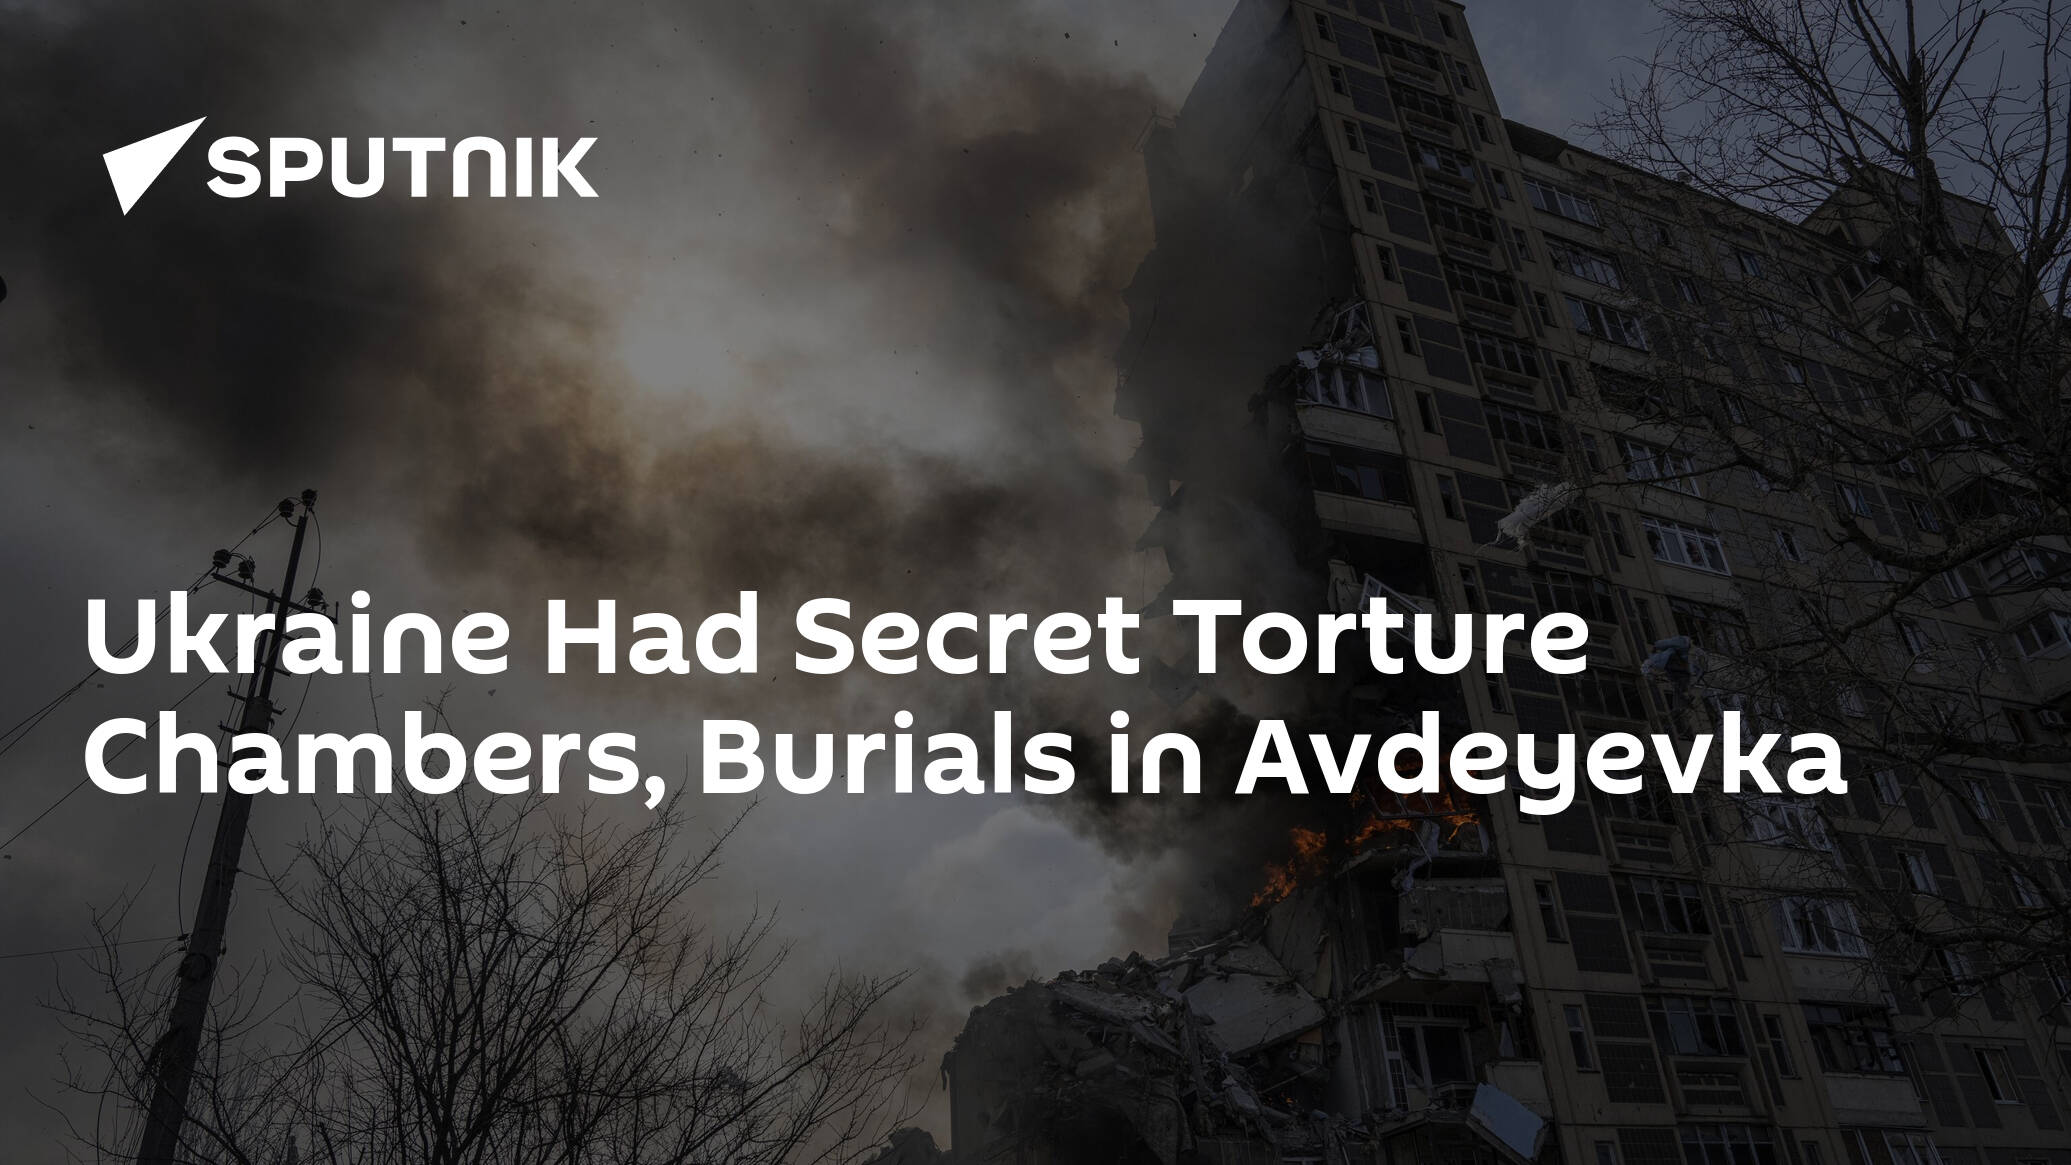 Ukraine Had Secret Torture Chambers, Burials in Avdeyevka